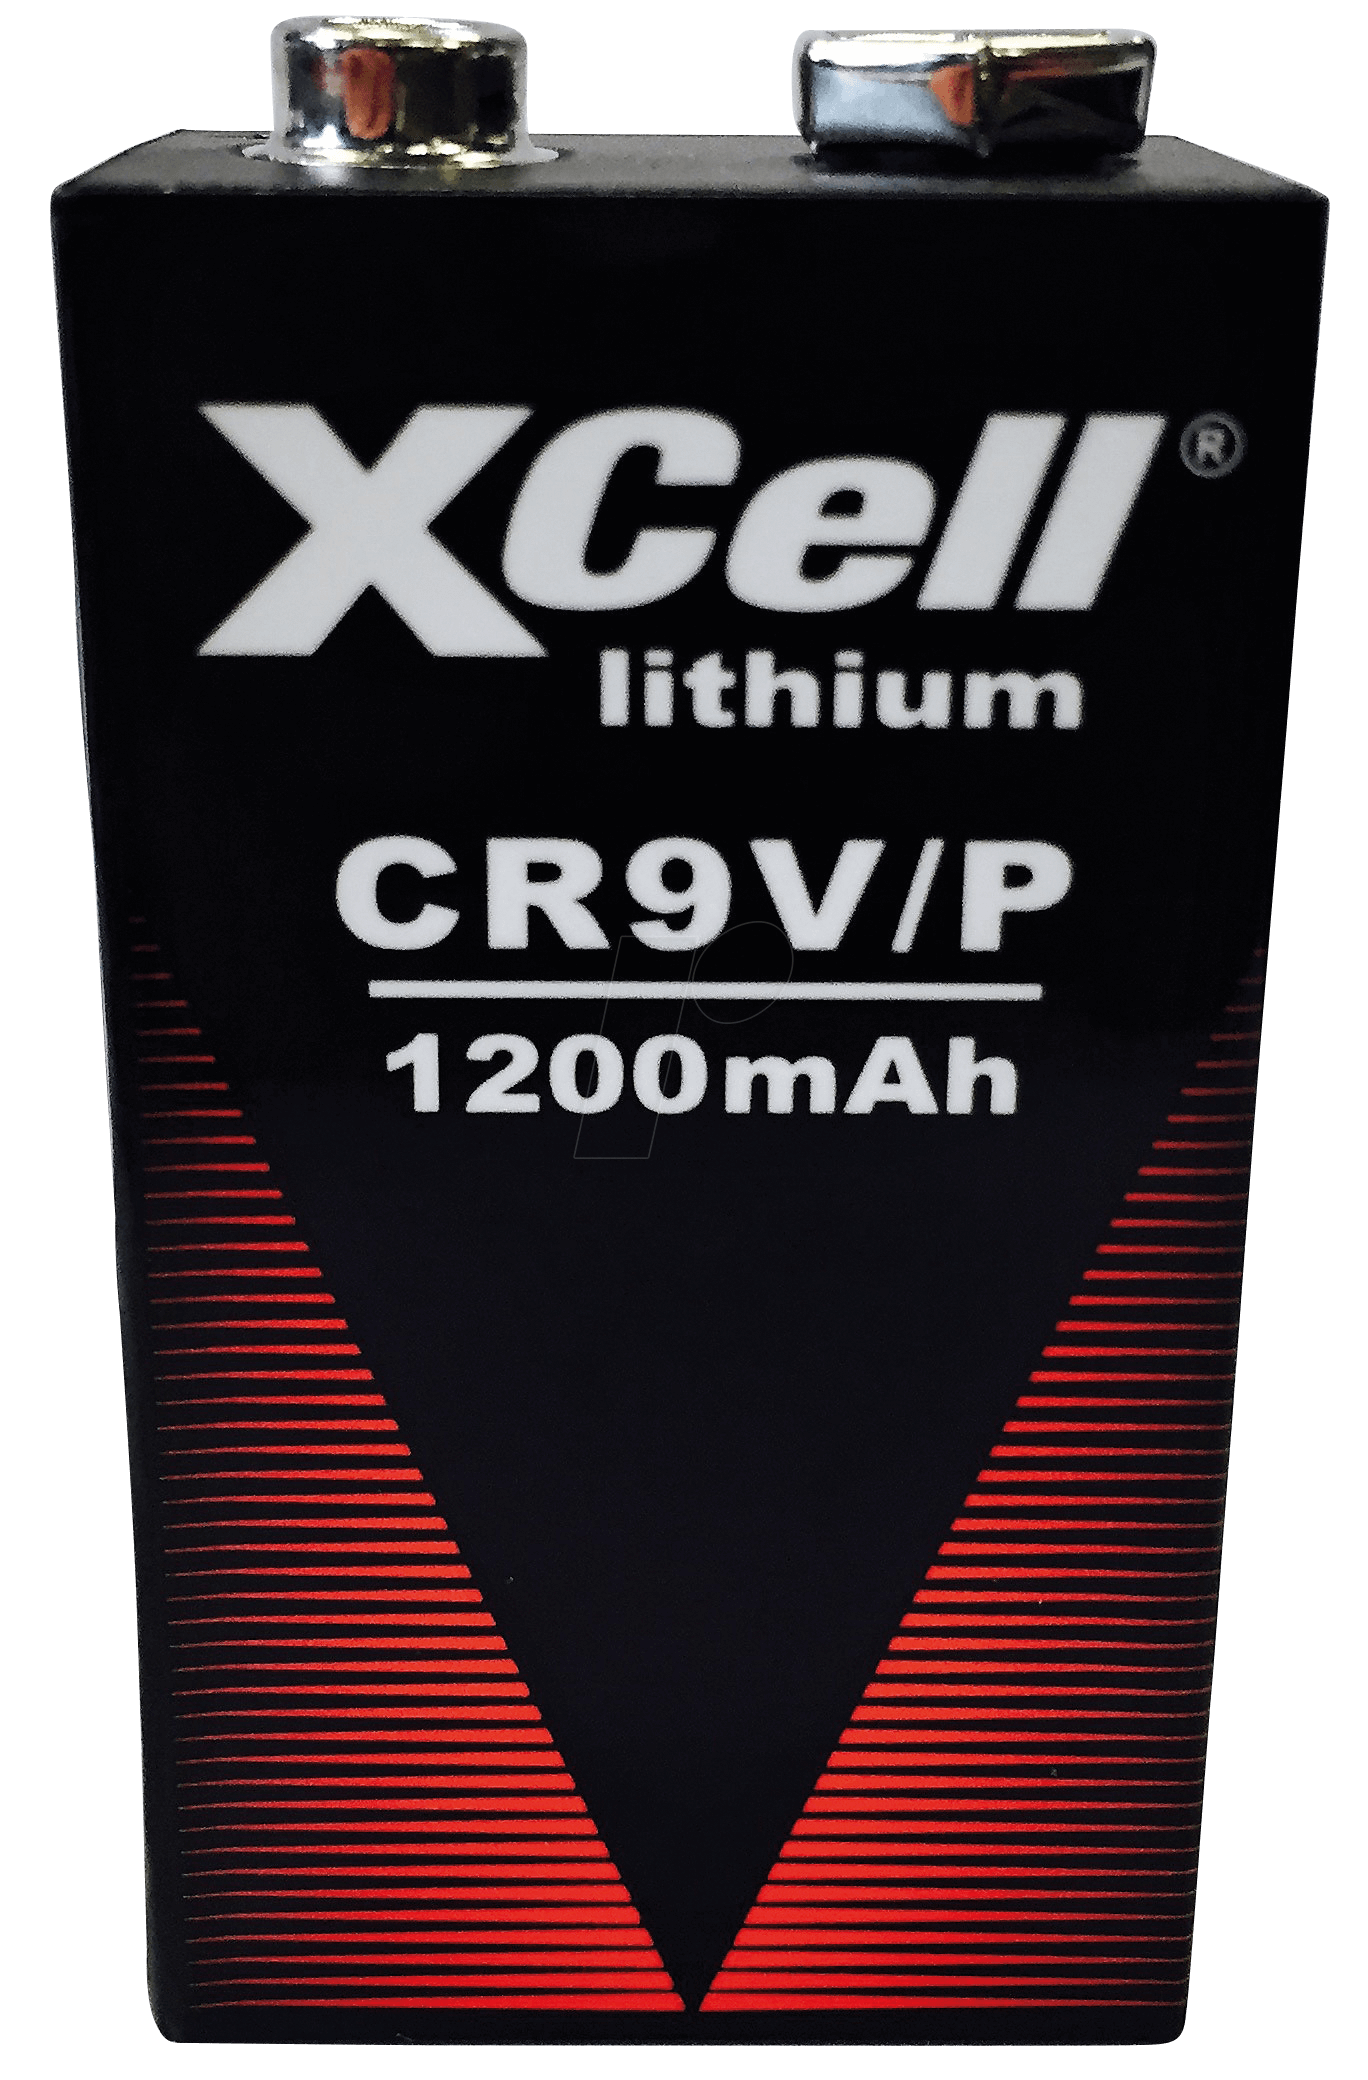 Ontslag nemen Vliegveld matig LITHIUM 9V XCELL: XCELL lithium-cel, 9 Volt-blok, 1200mAh bei reichelt  elektronik